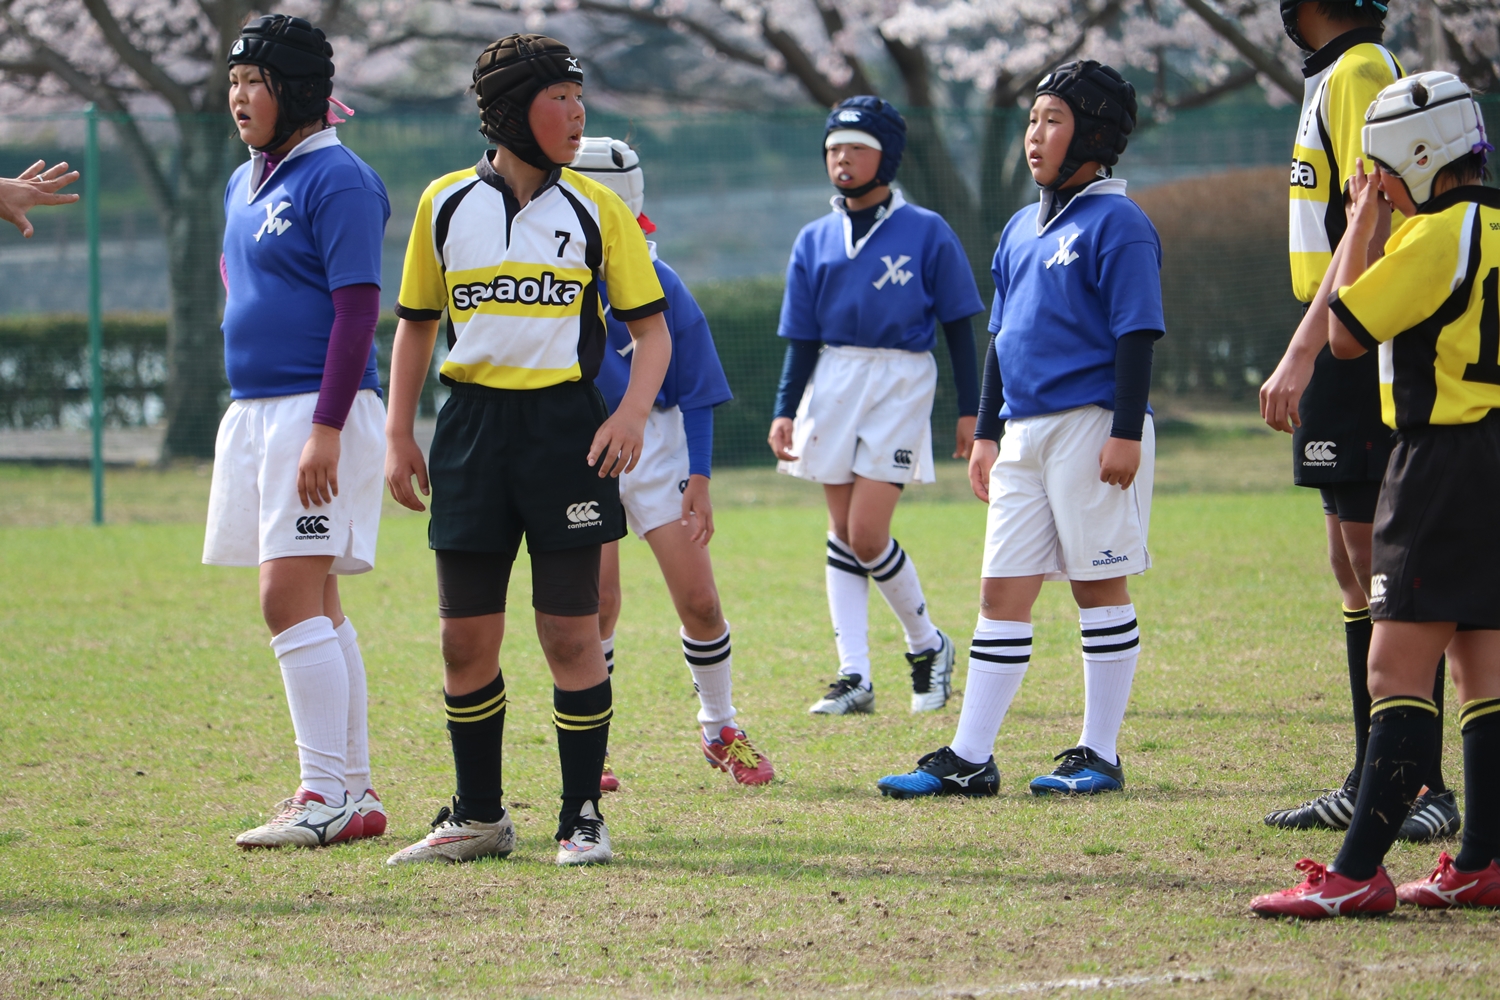 youngwave_kitakyusyu_rugby_school_kasugahai2016103.JPG